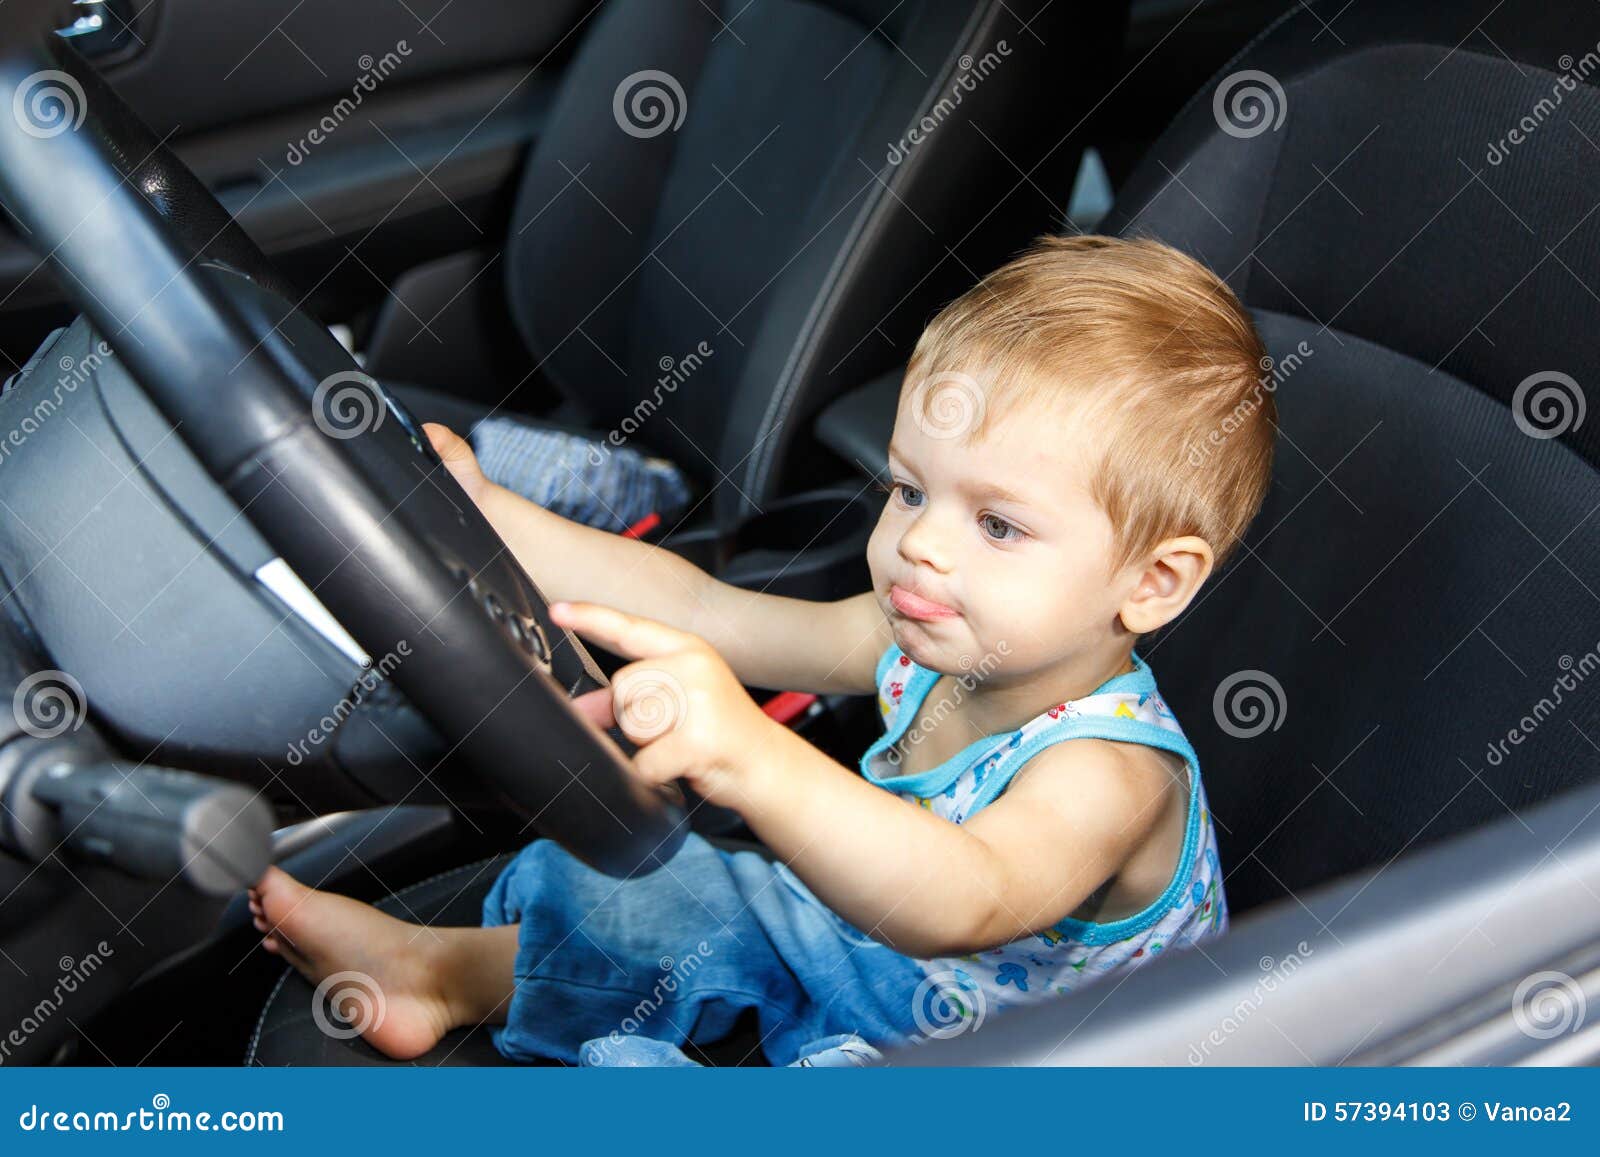 gifted small kid drives real car